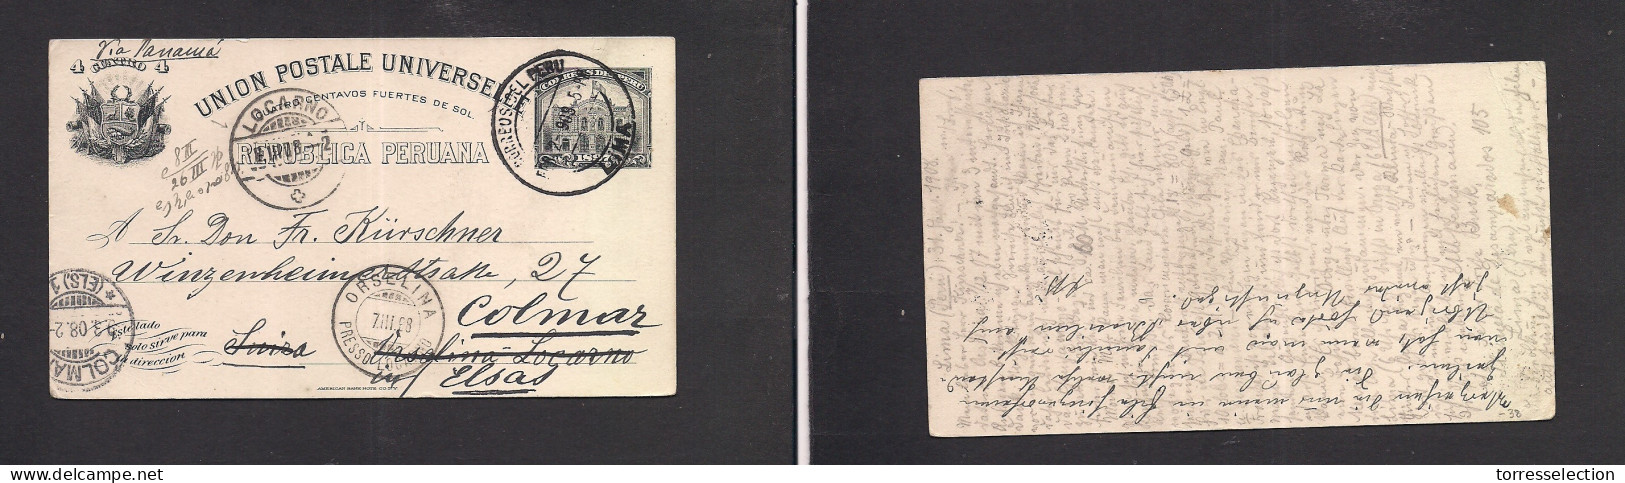 PERU. 1908 (31 Jan) Lima - Colmar, Switzerland (7 March) 4c Black Stat Card. Fine Used Via Panama. XSALE. - Pérou